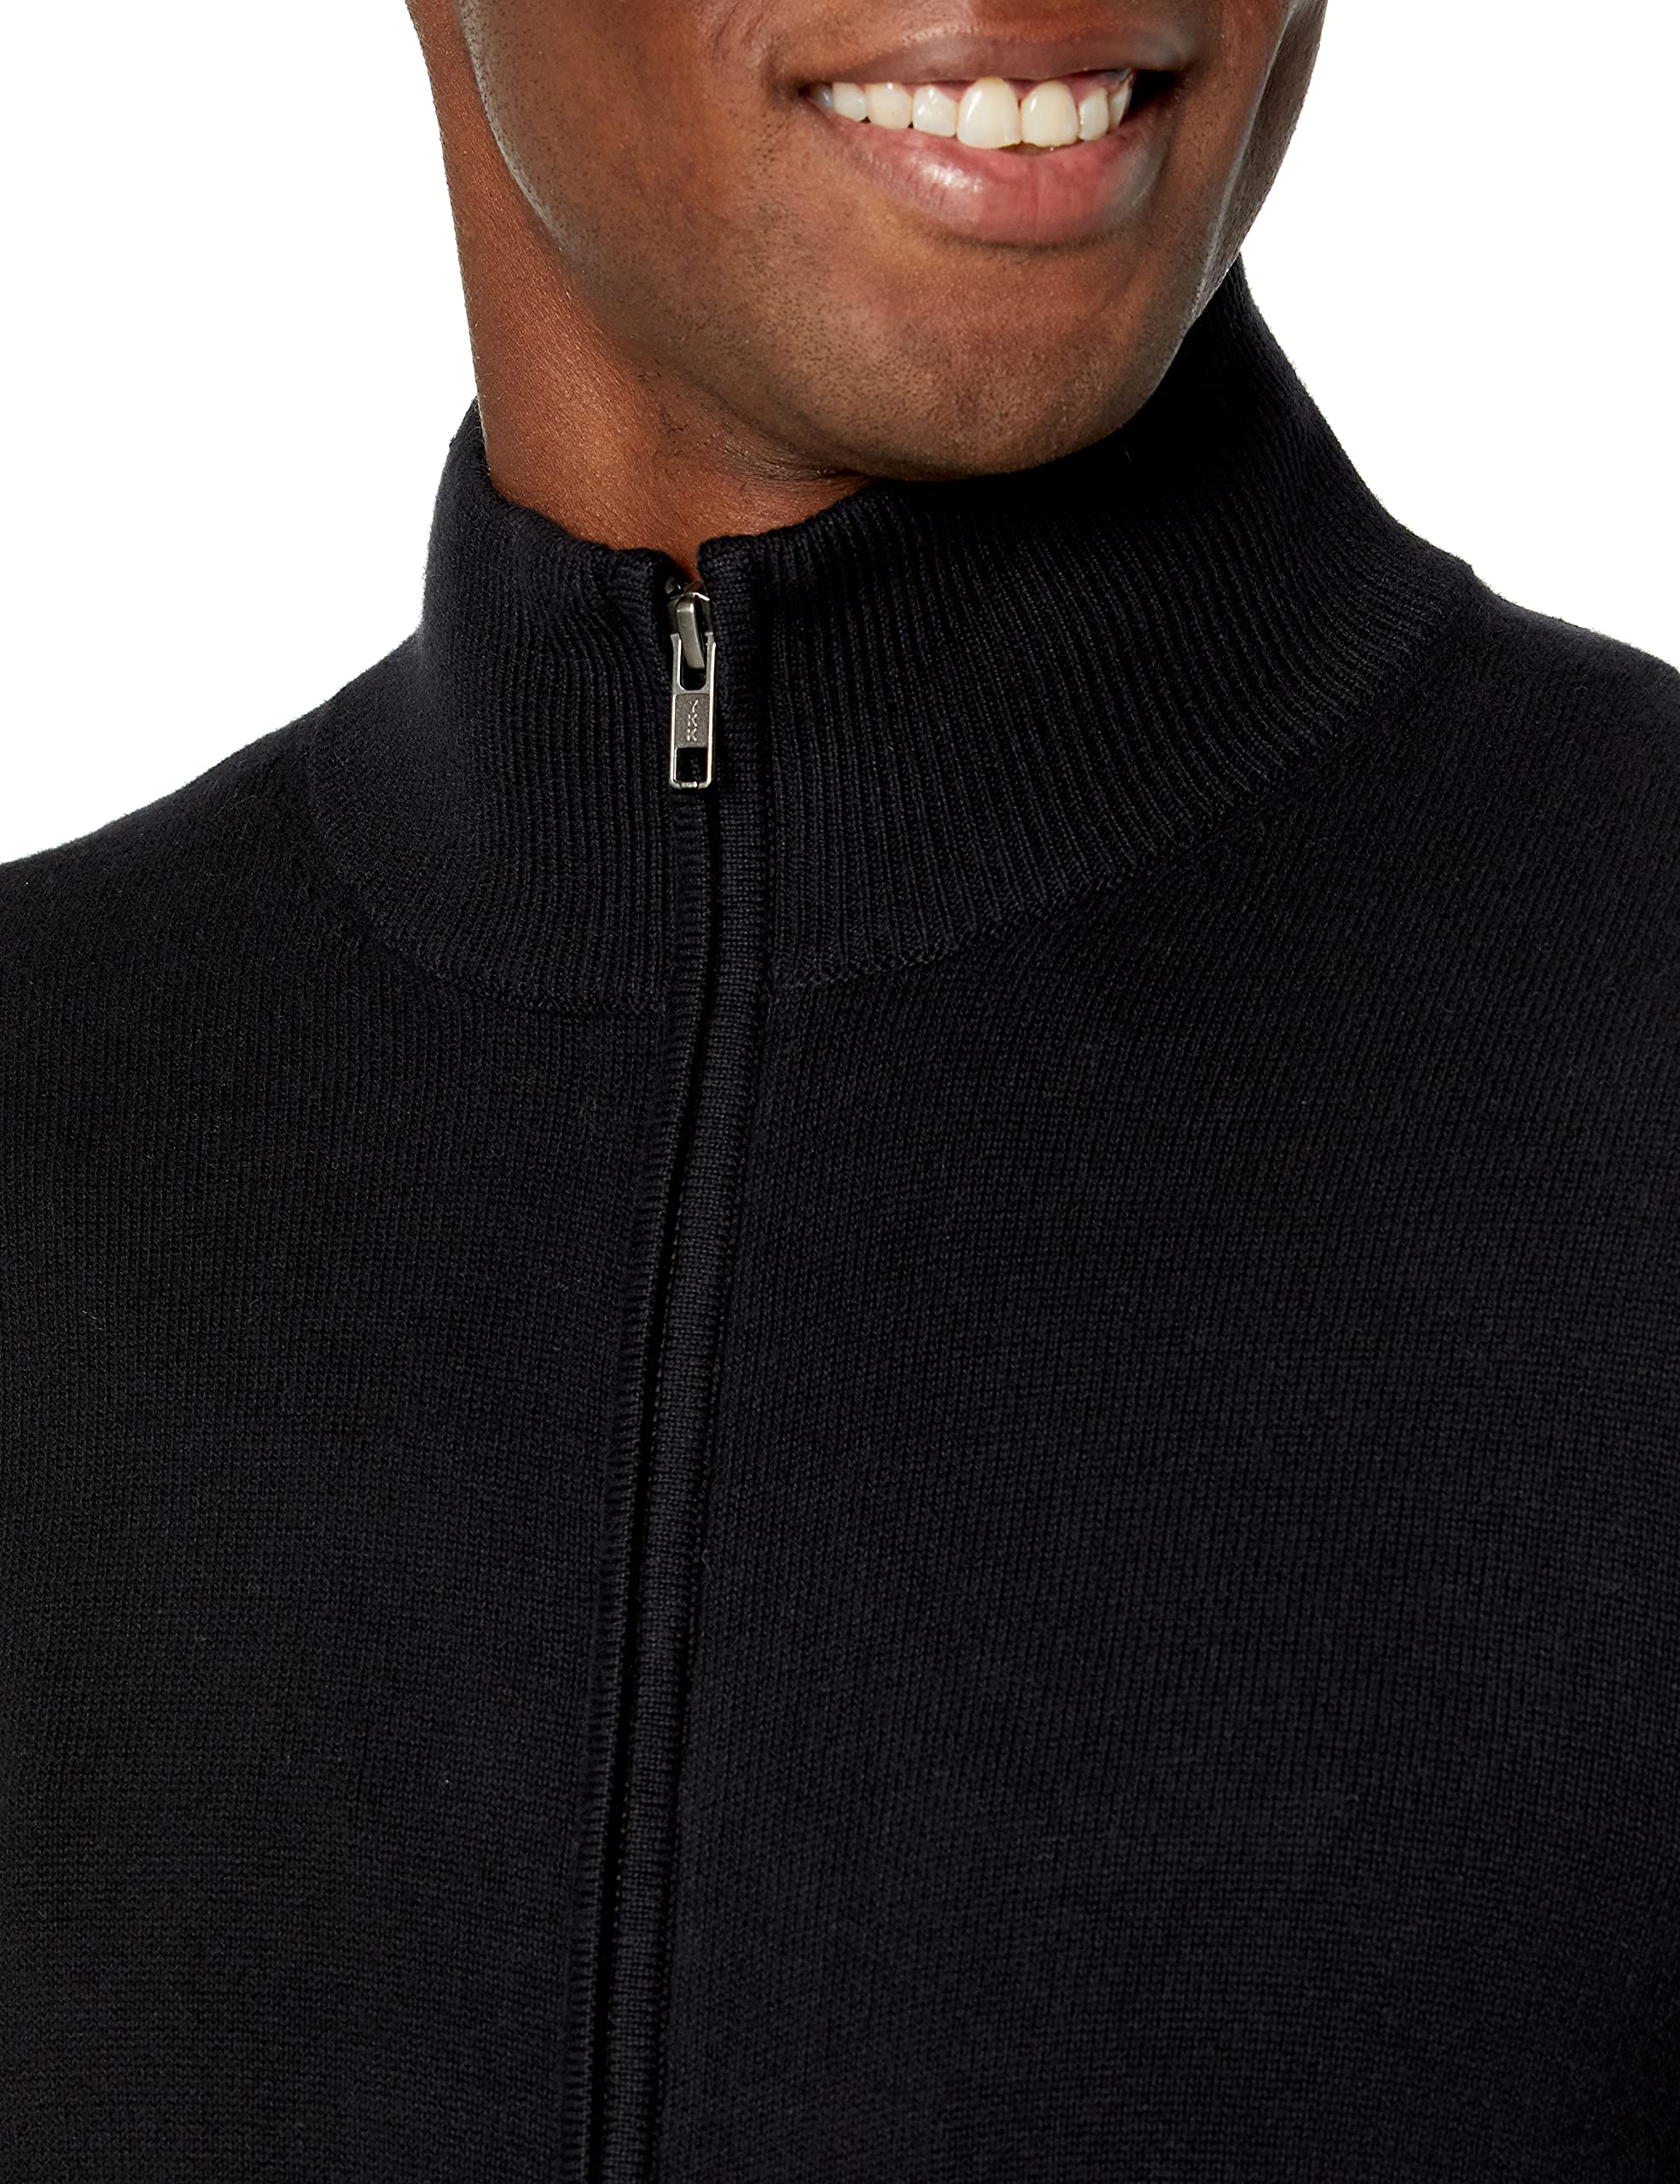 Amazon Essentials Men's Full-Zip Cotton Sweater